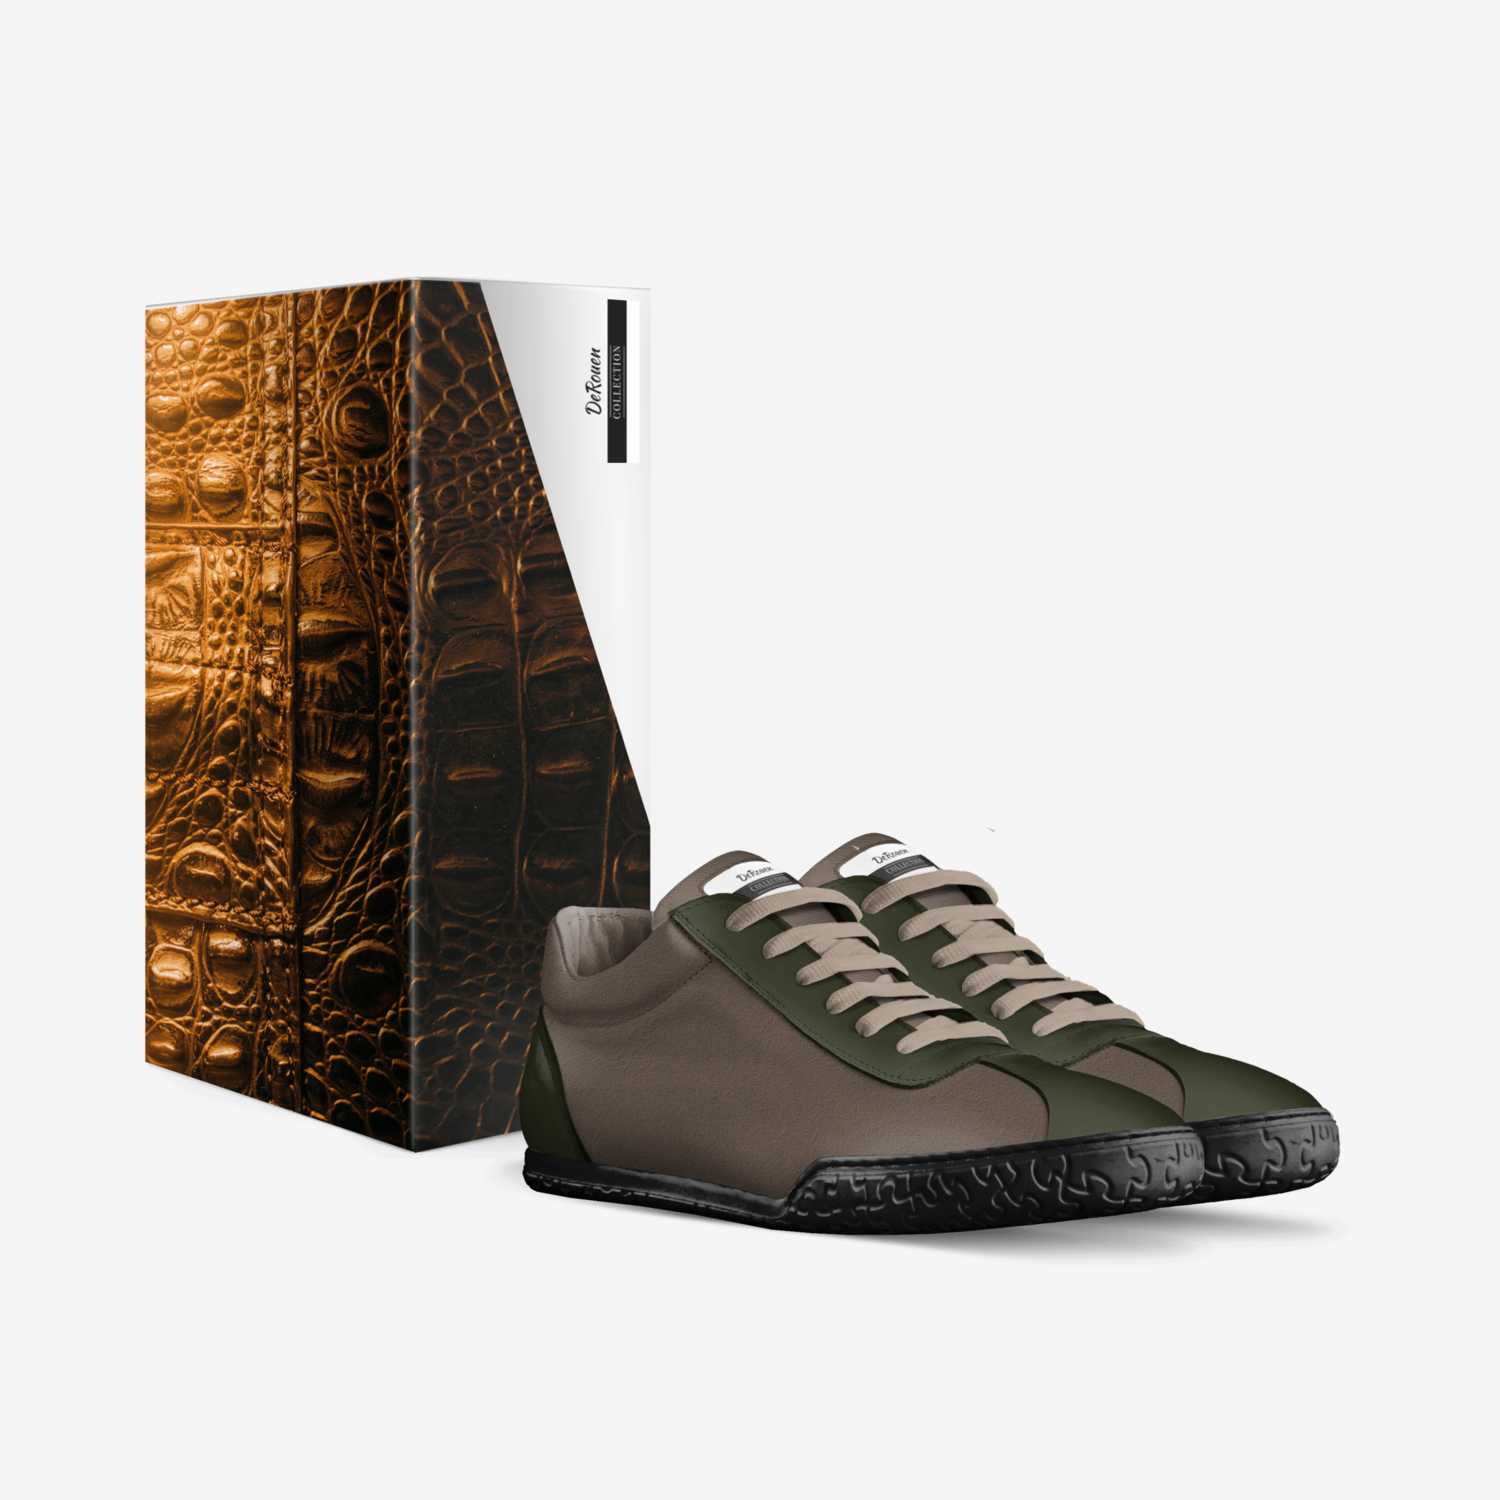 DeRouen  custom made in Italy shoes by Jeffrey Derouen | Box view